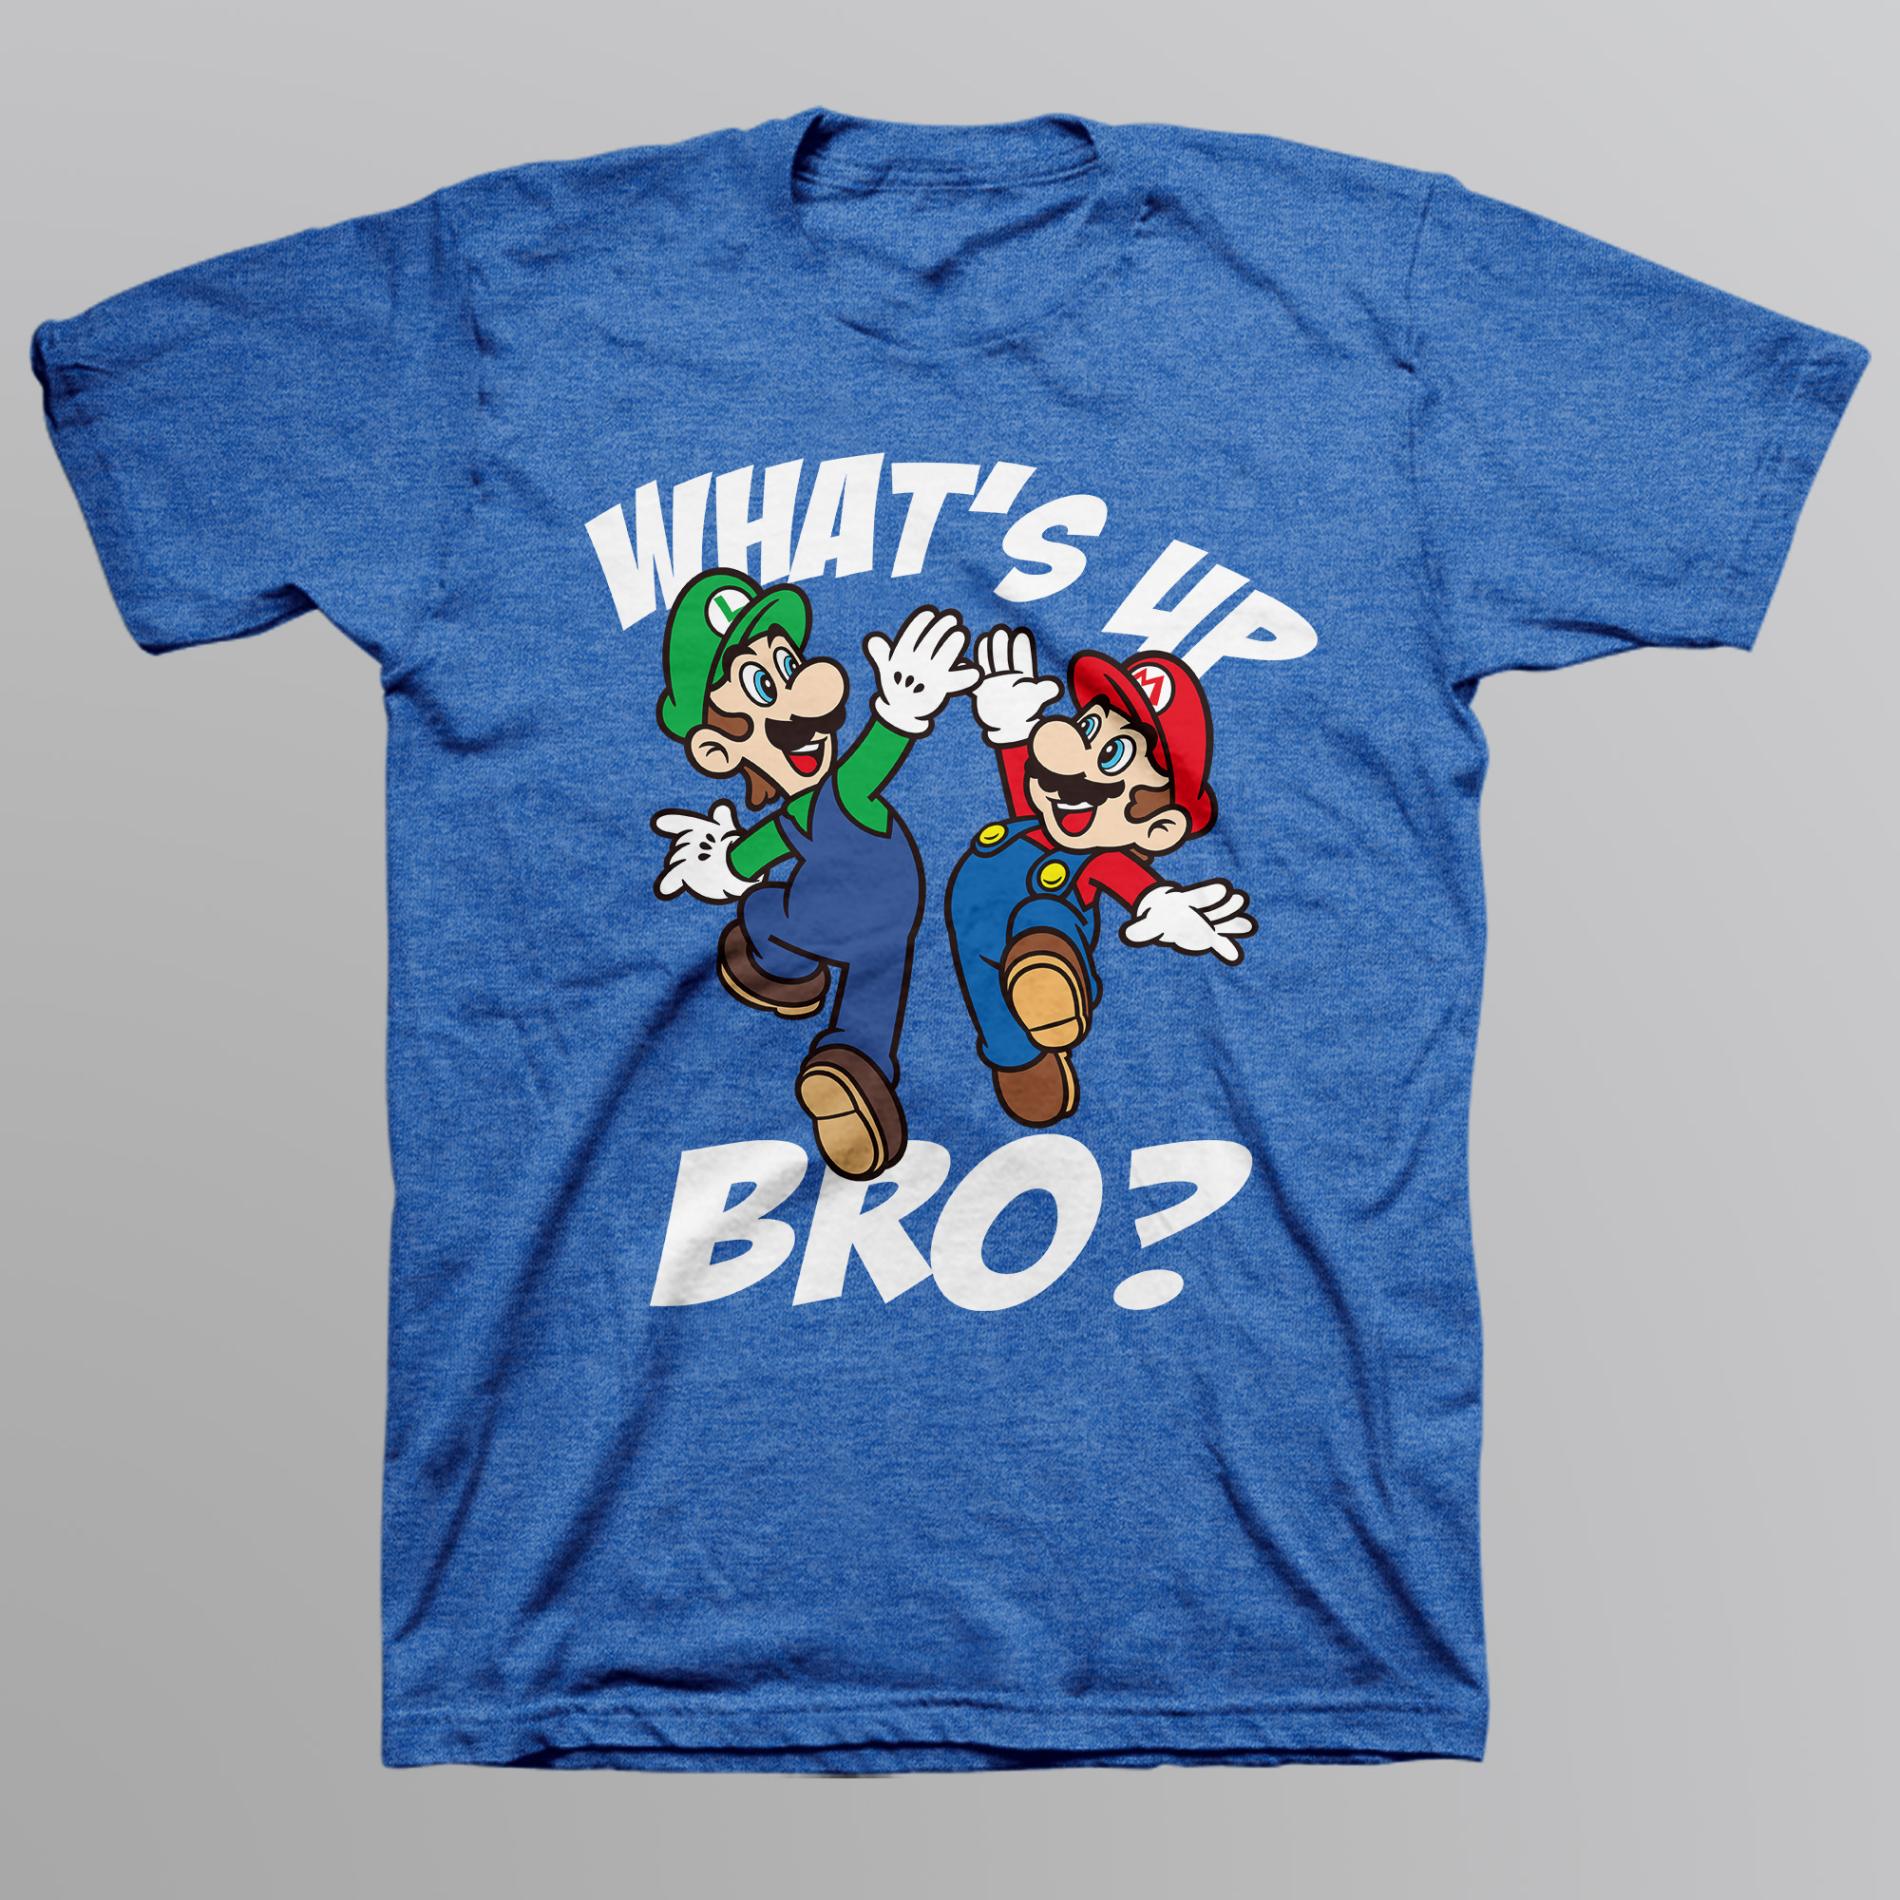 Nintendo Super Mario Boy's Graphic T-Shirt - What's Up Bro